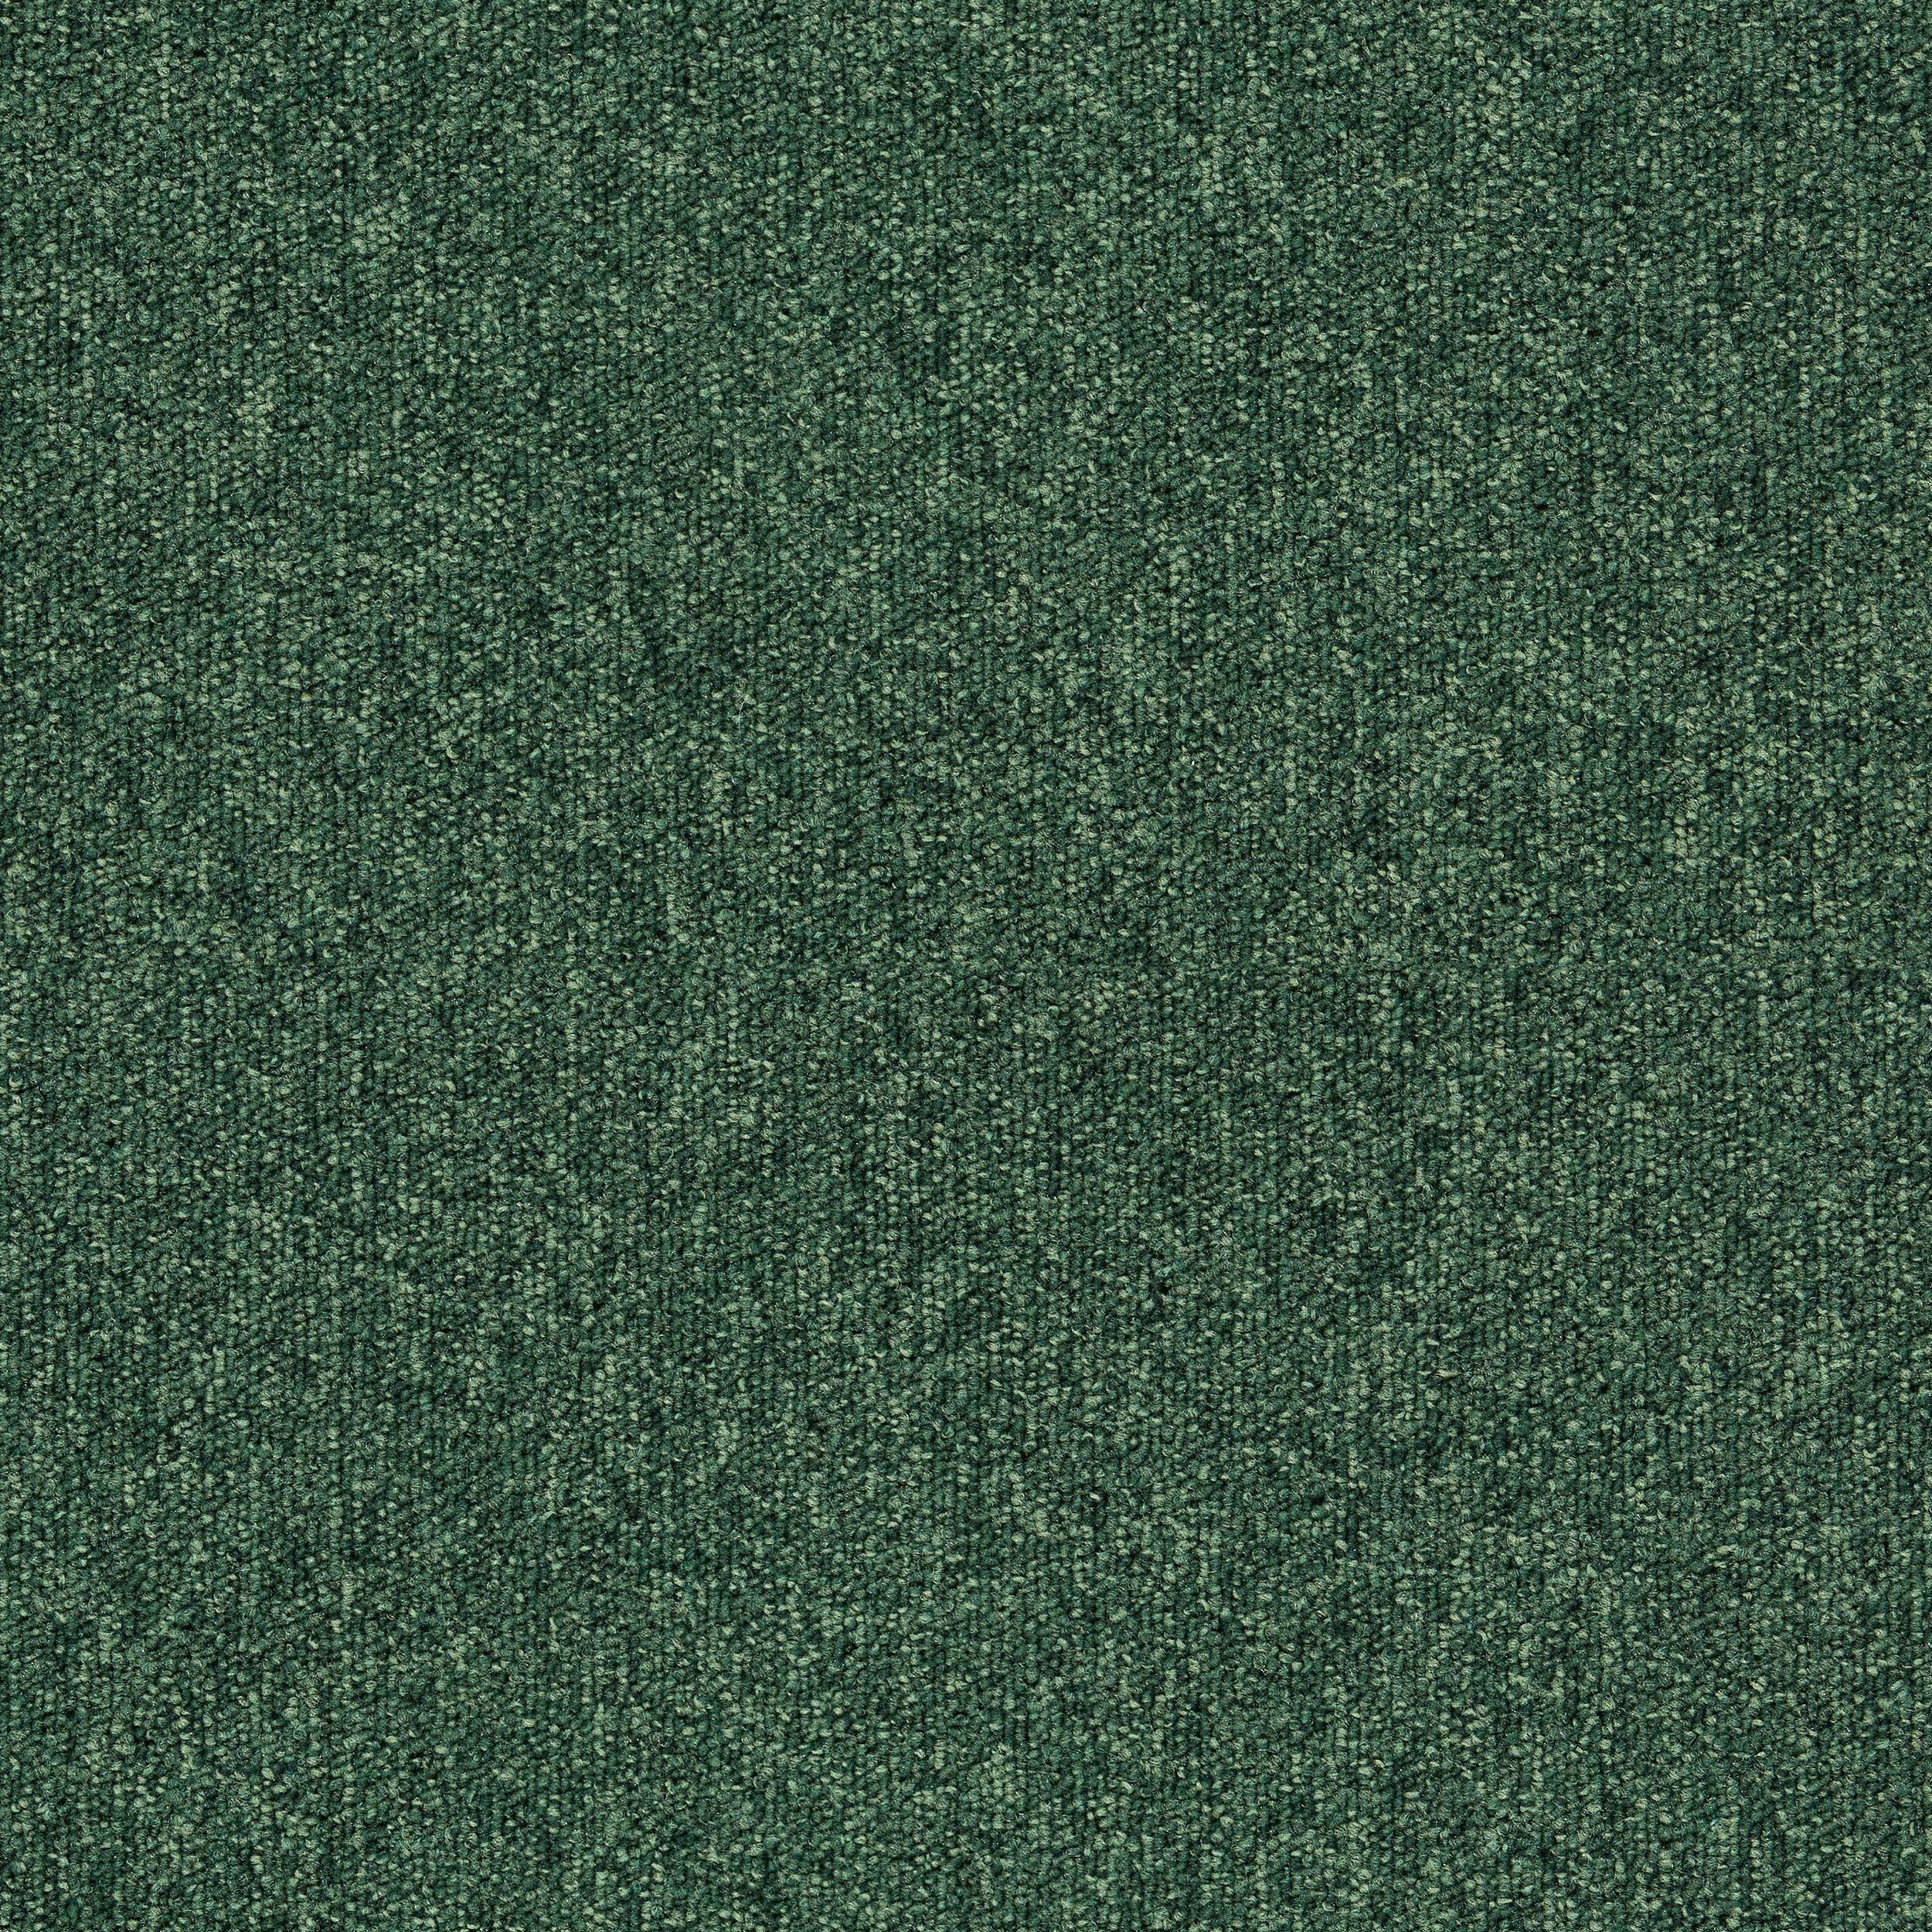 Heuga 727 Carpet Tile In Bottle Green número de imagen 8